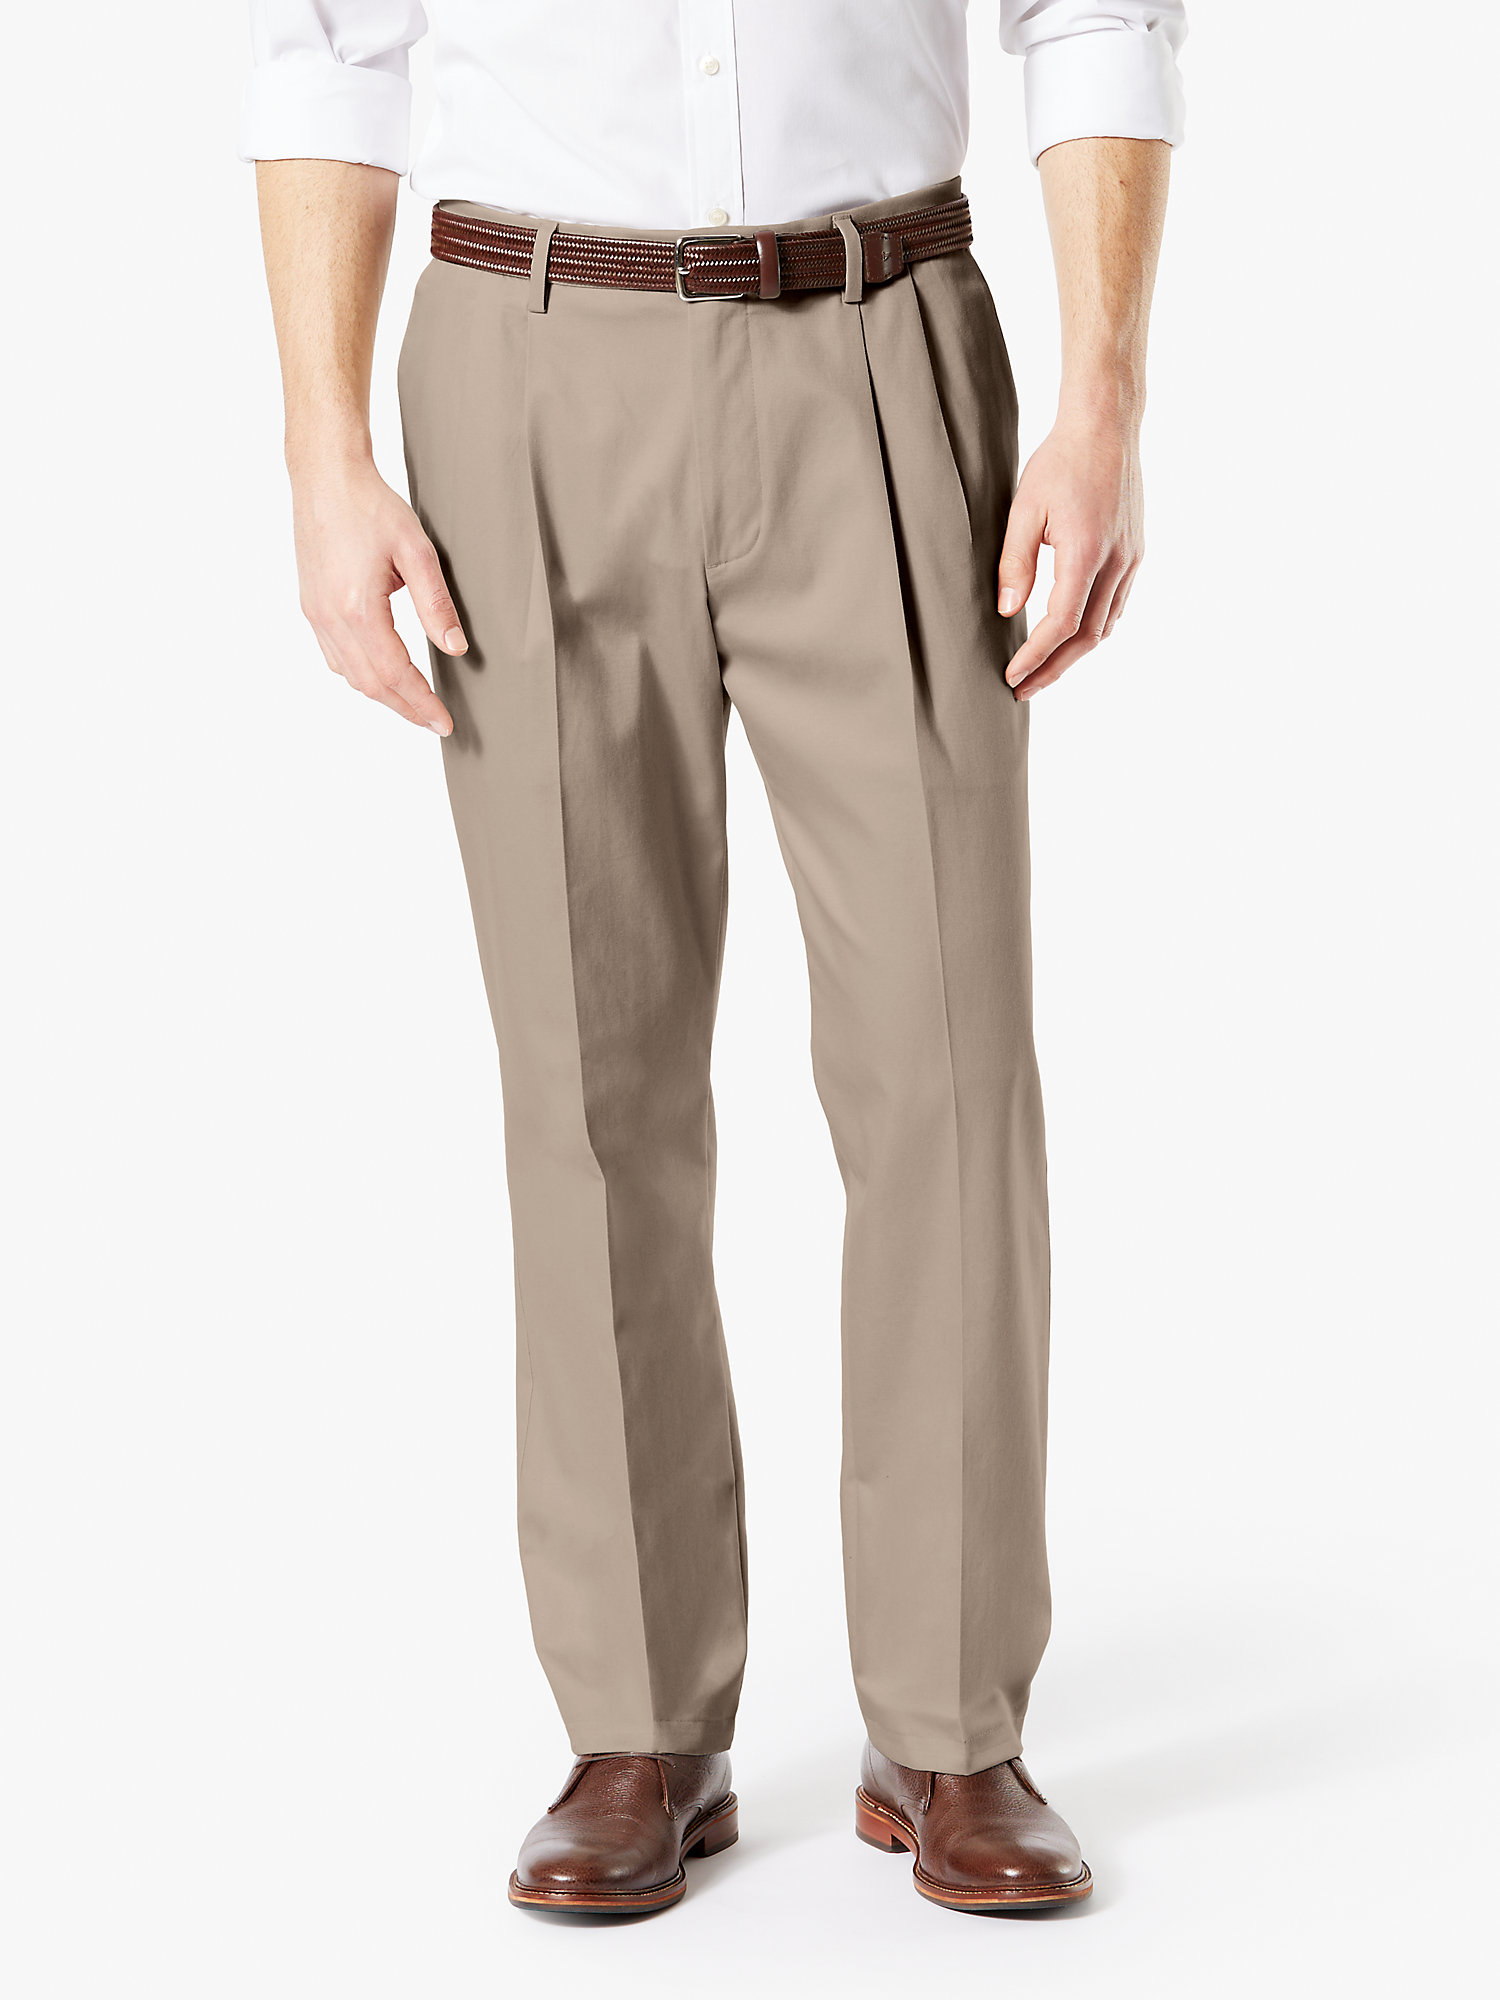 Dockers Men's Pleated Classic Fit Signature Khaki Lux Cotton Stretch Pants - image 1 of 6